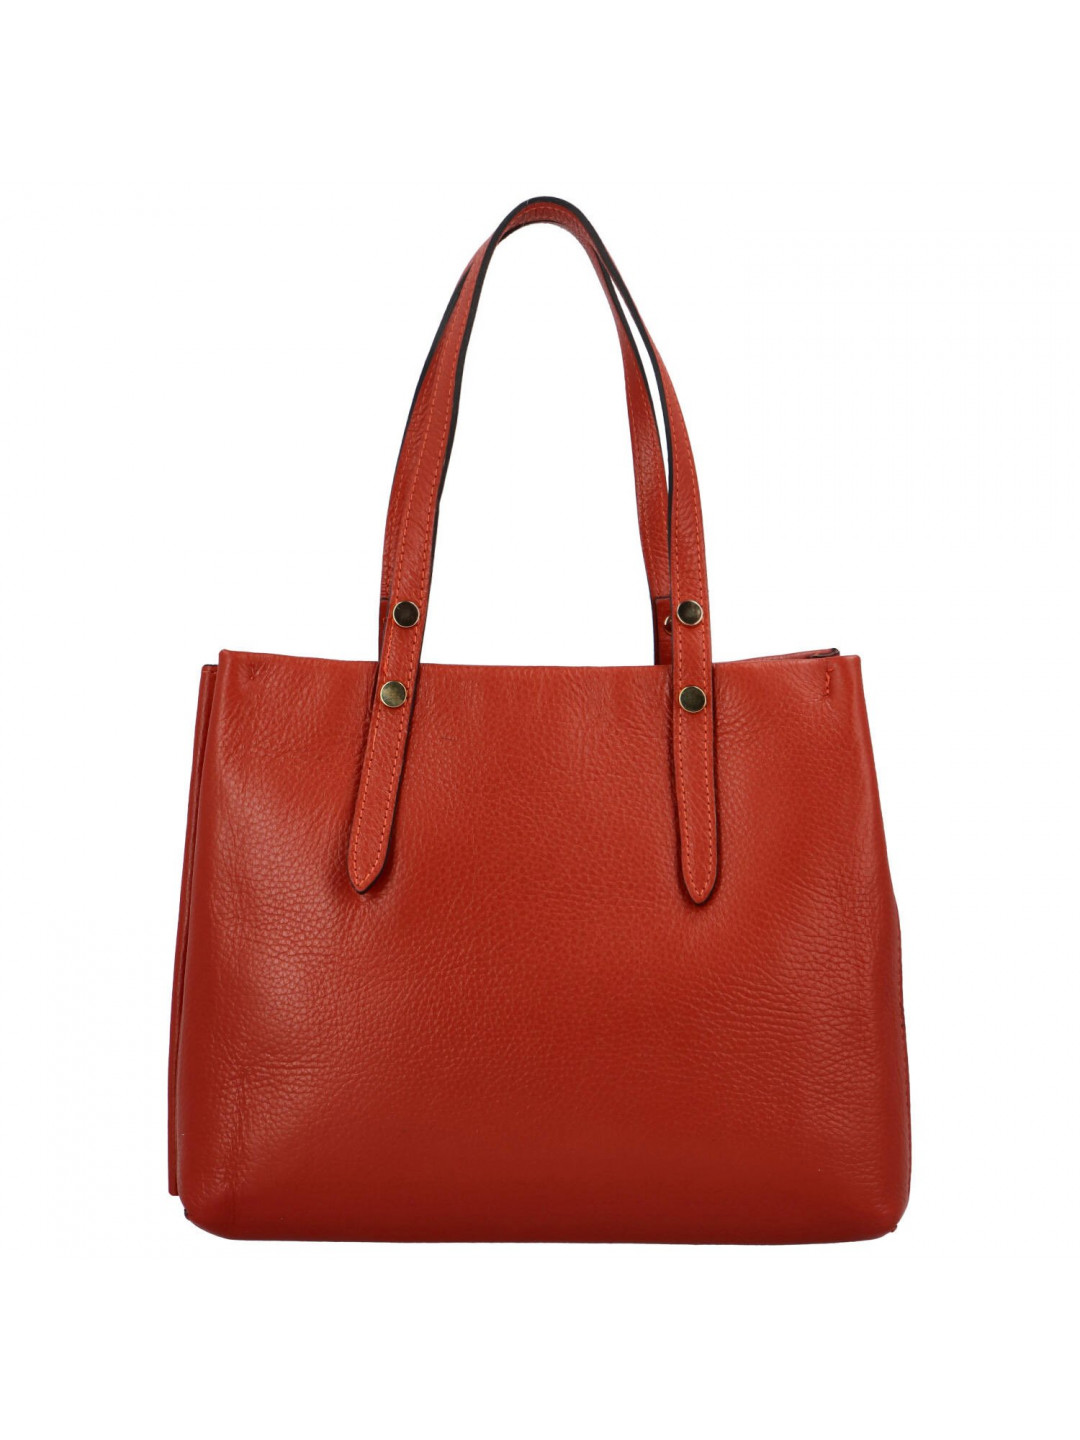 Dámska kožená kabelka cihlově červená – Delami Nylea